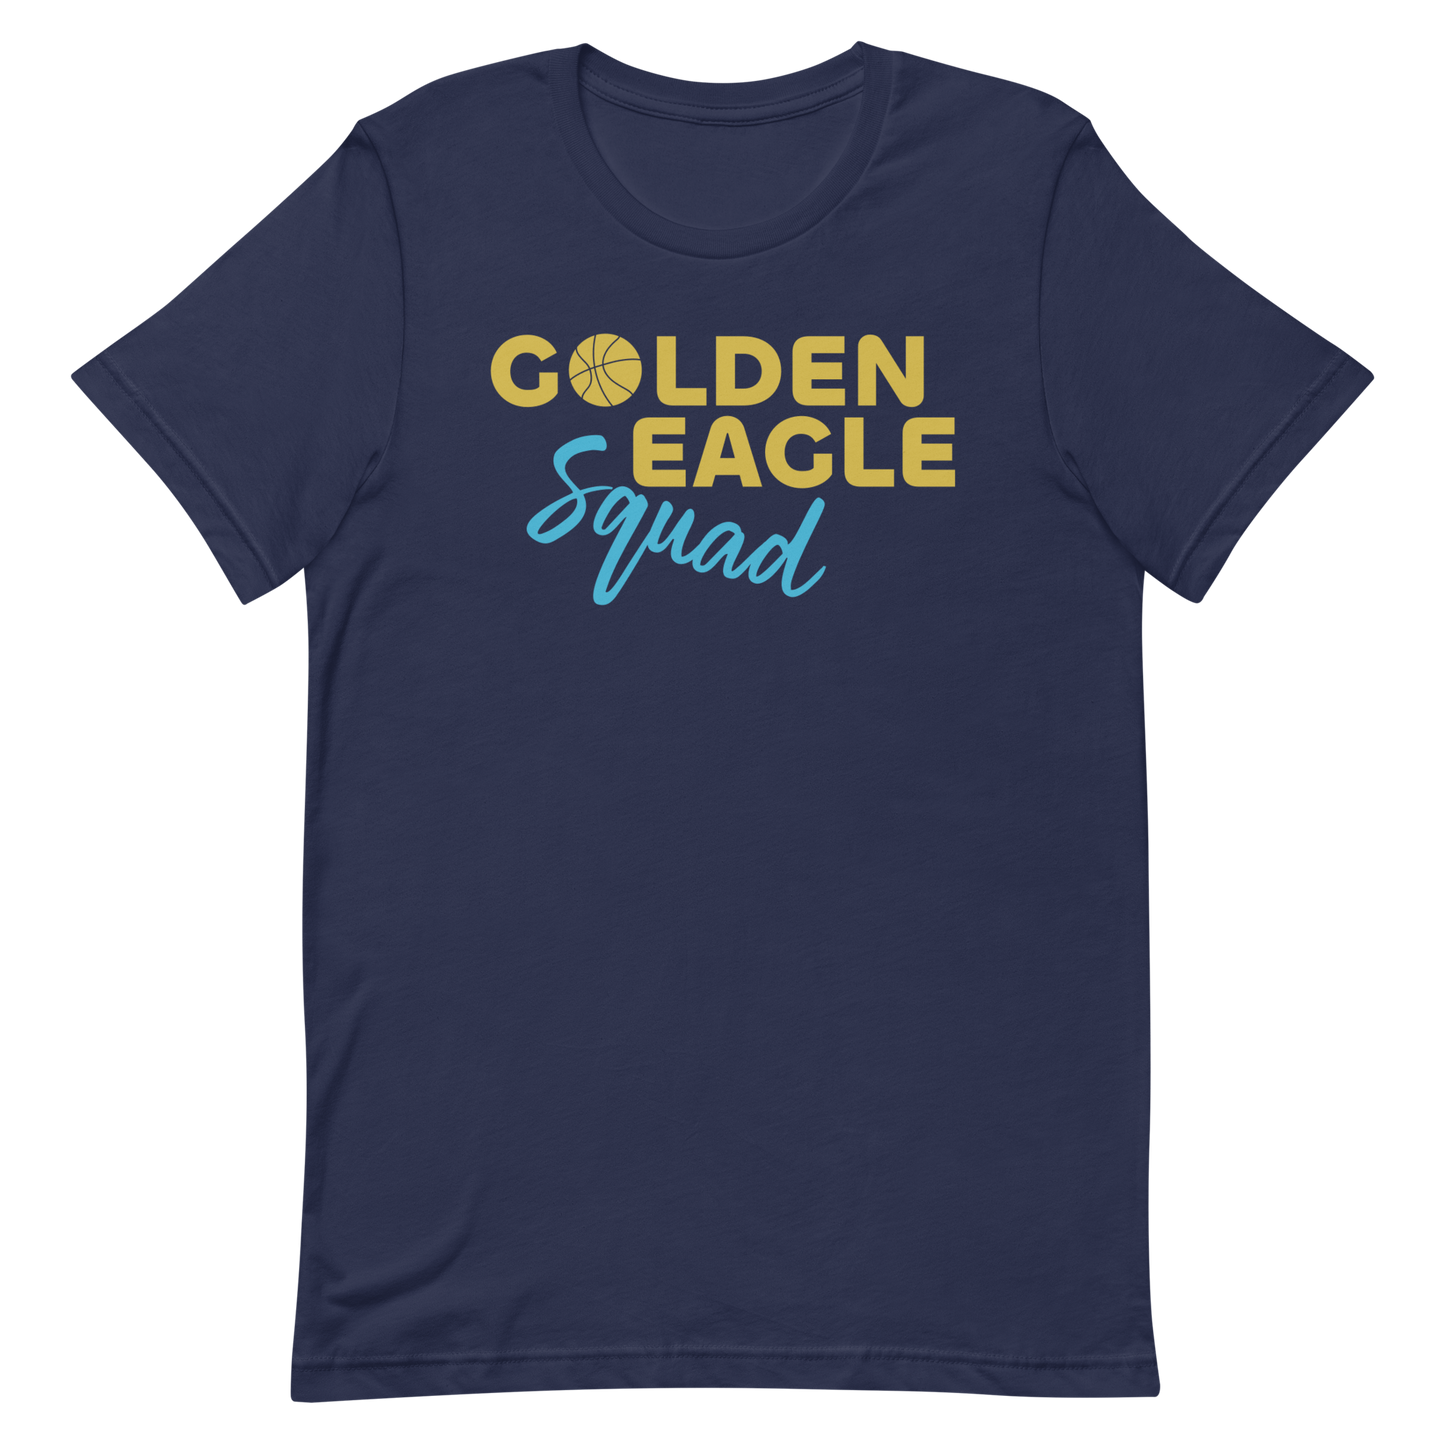 Golden Eagle Squad Basketball shirt